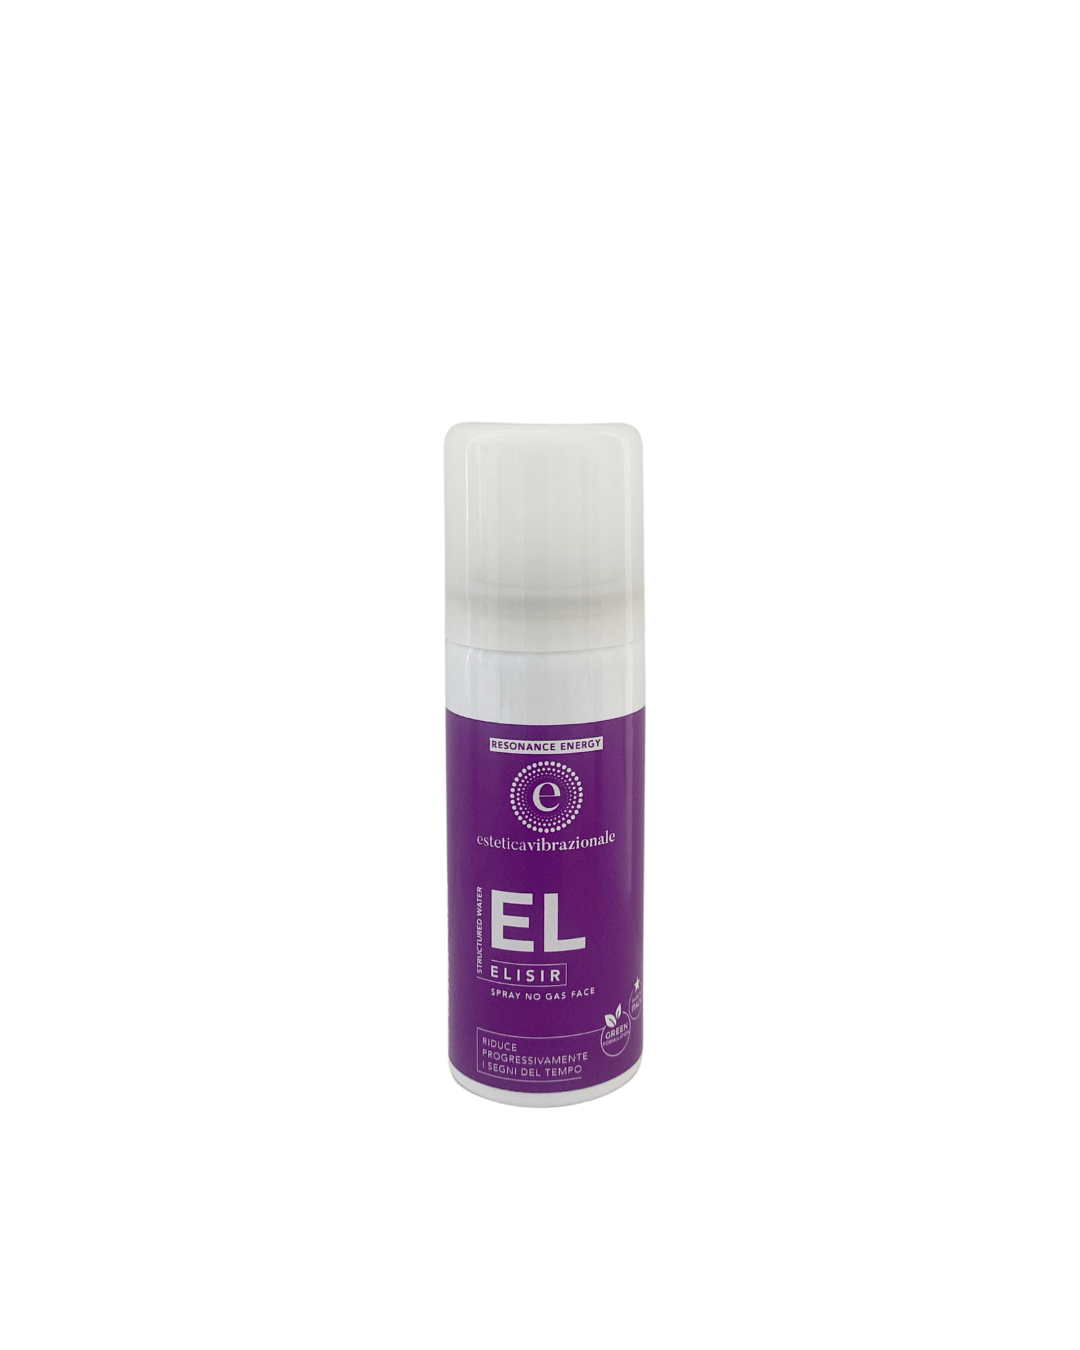 Elisir (50 ml)